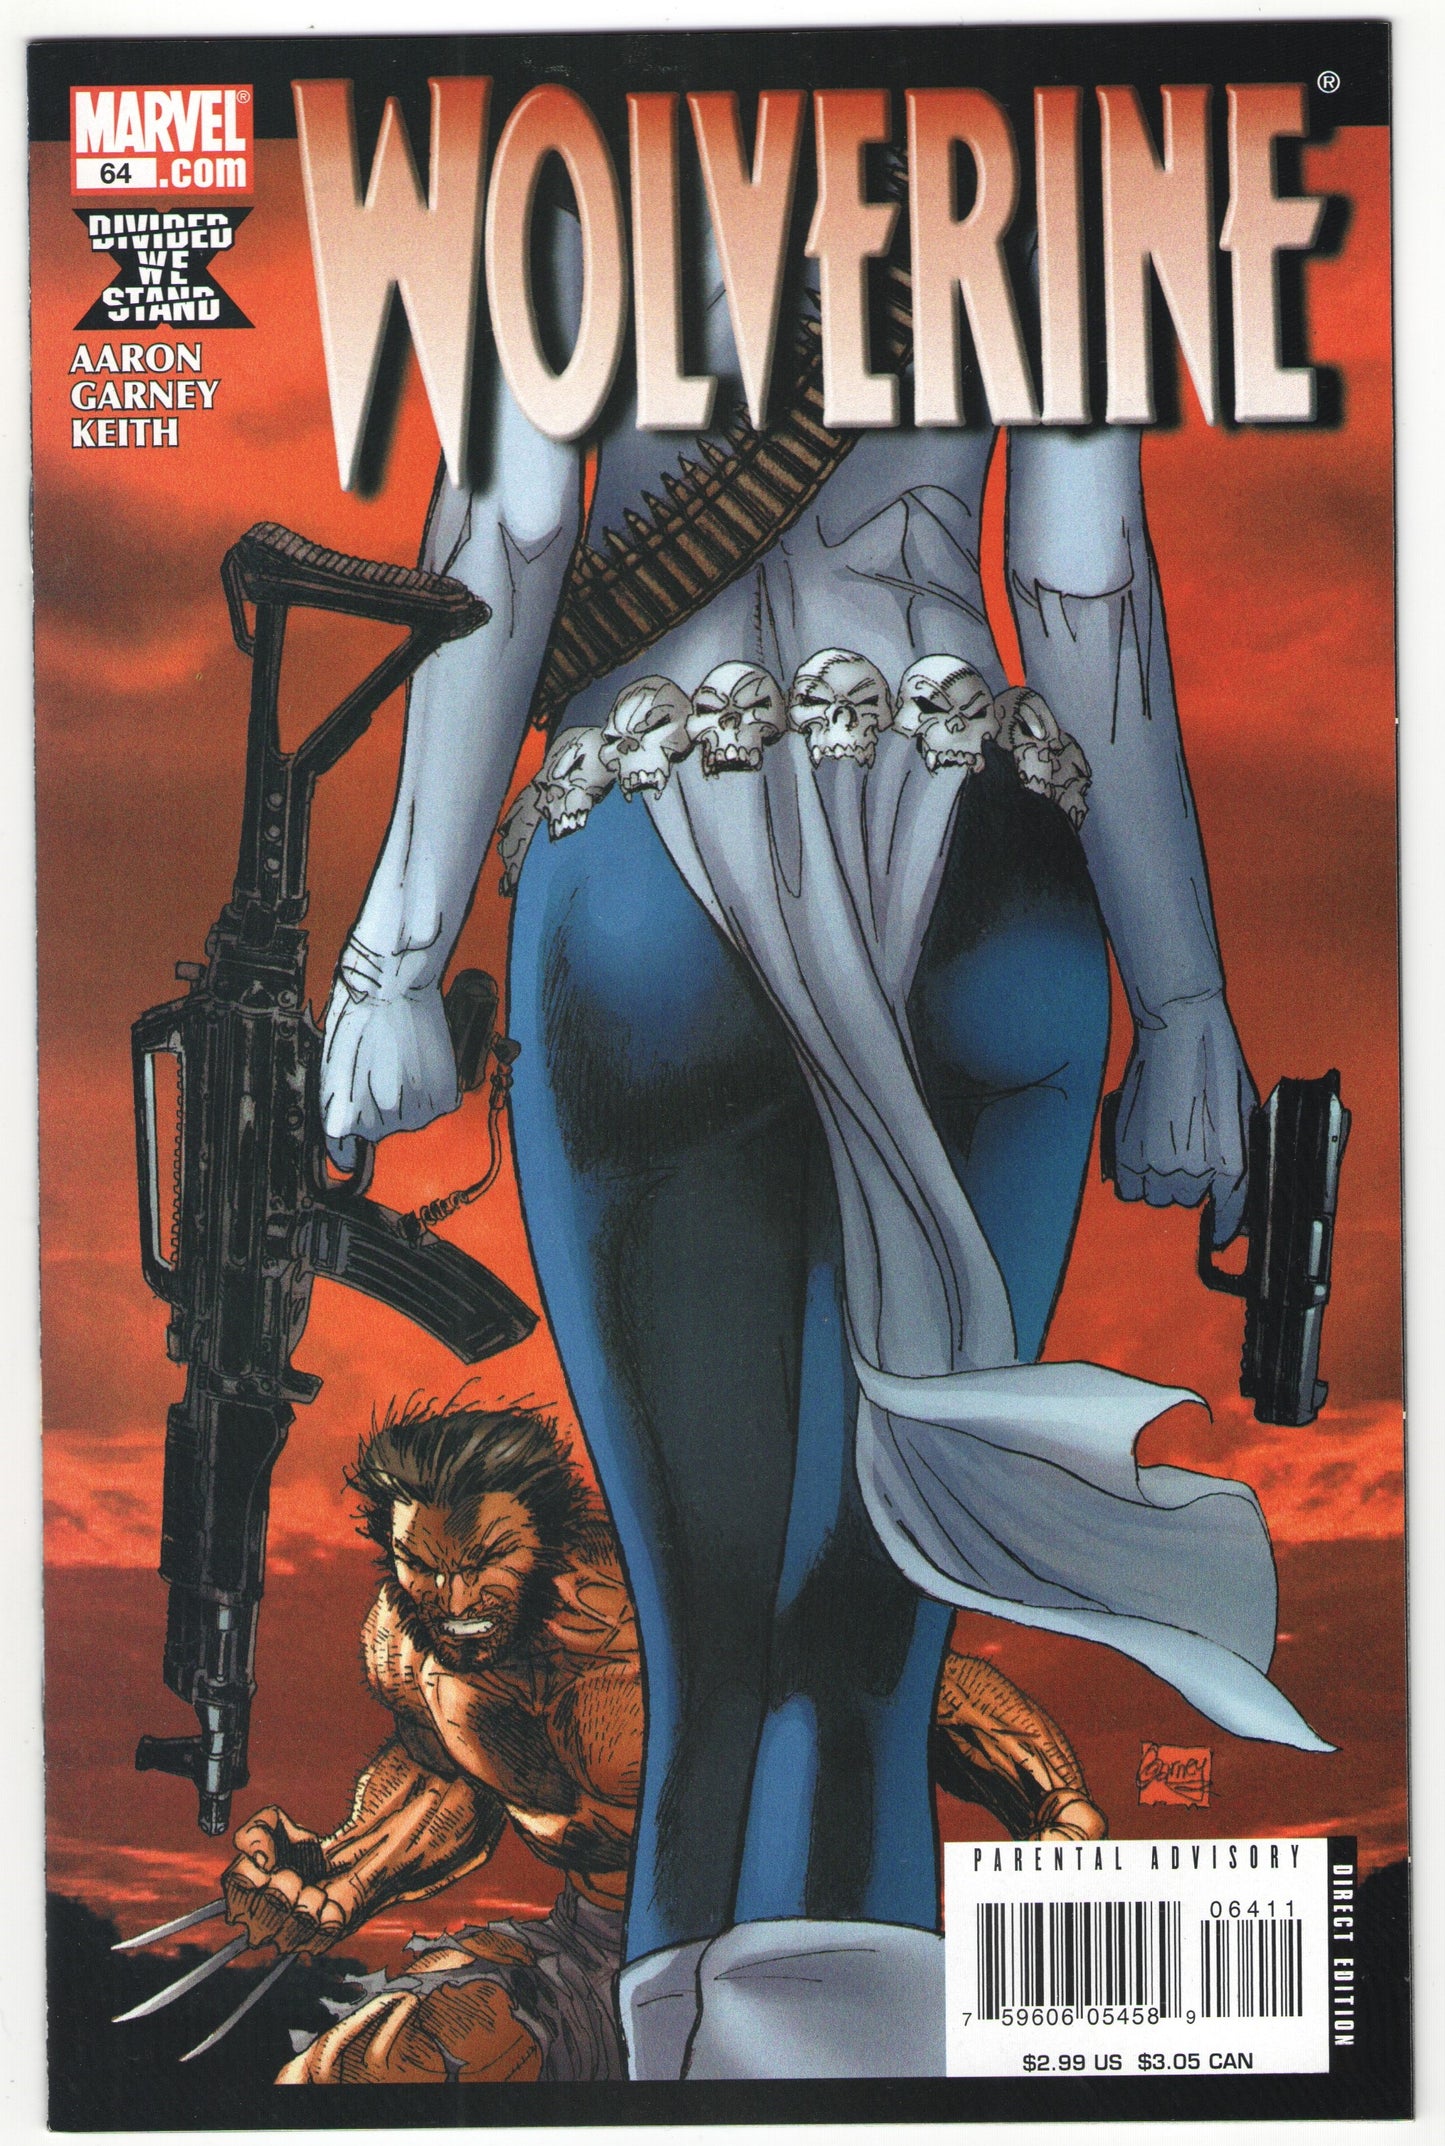 Wolverine #62-65 “Get Mystique” Complete Story Arc (2008)